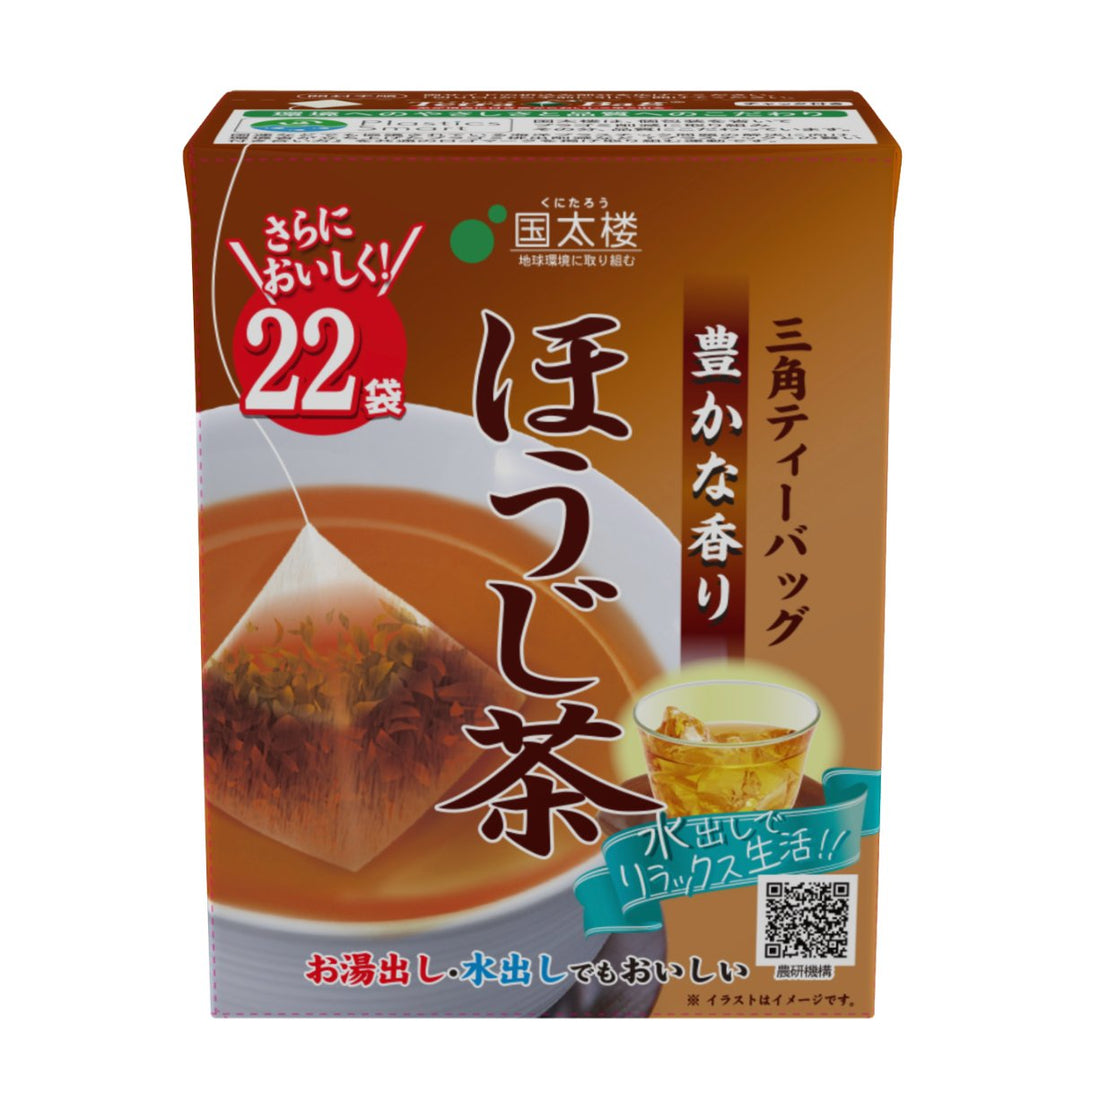 Kunitaro rich aroma roasted tea triangular tea bags 22 Packs 44g - NihonMura